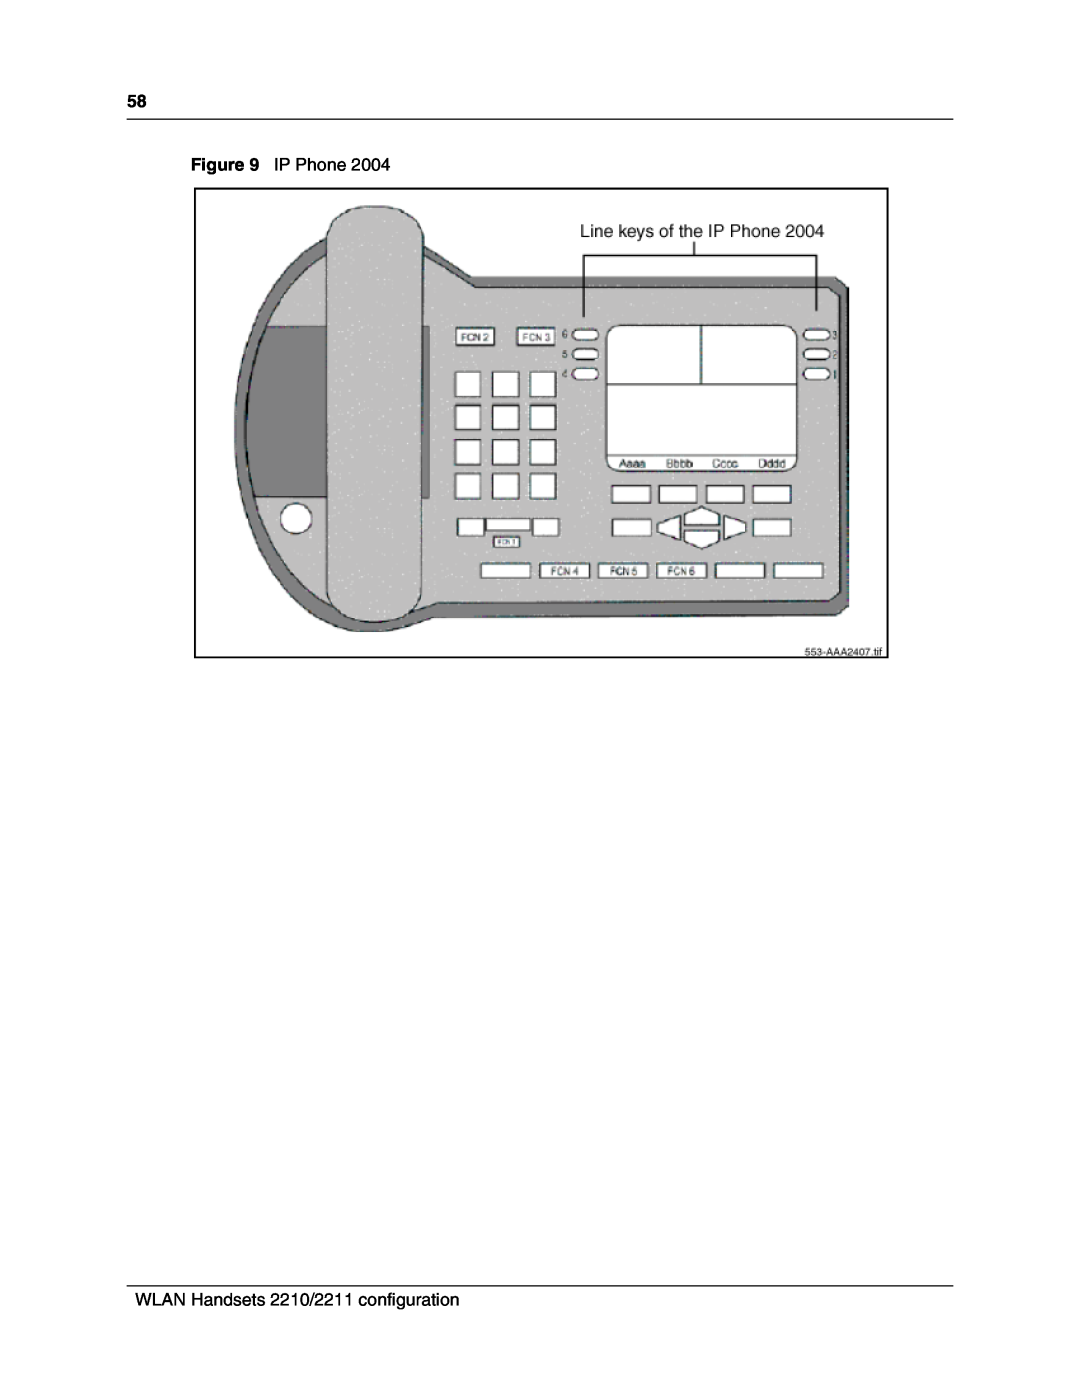 Nortel Networks MOG7xx, MOG6xx manual IP Phone, WLAN Handsets 2210/2211 configuration 